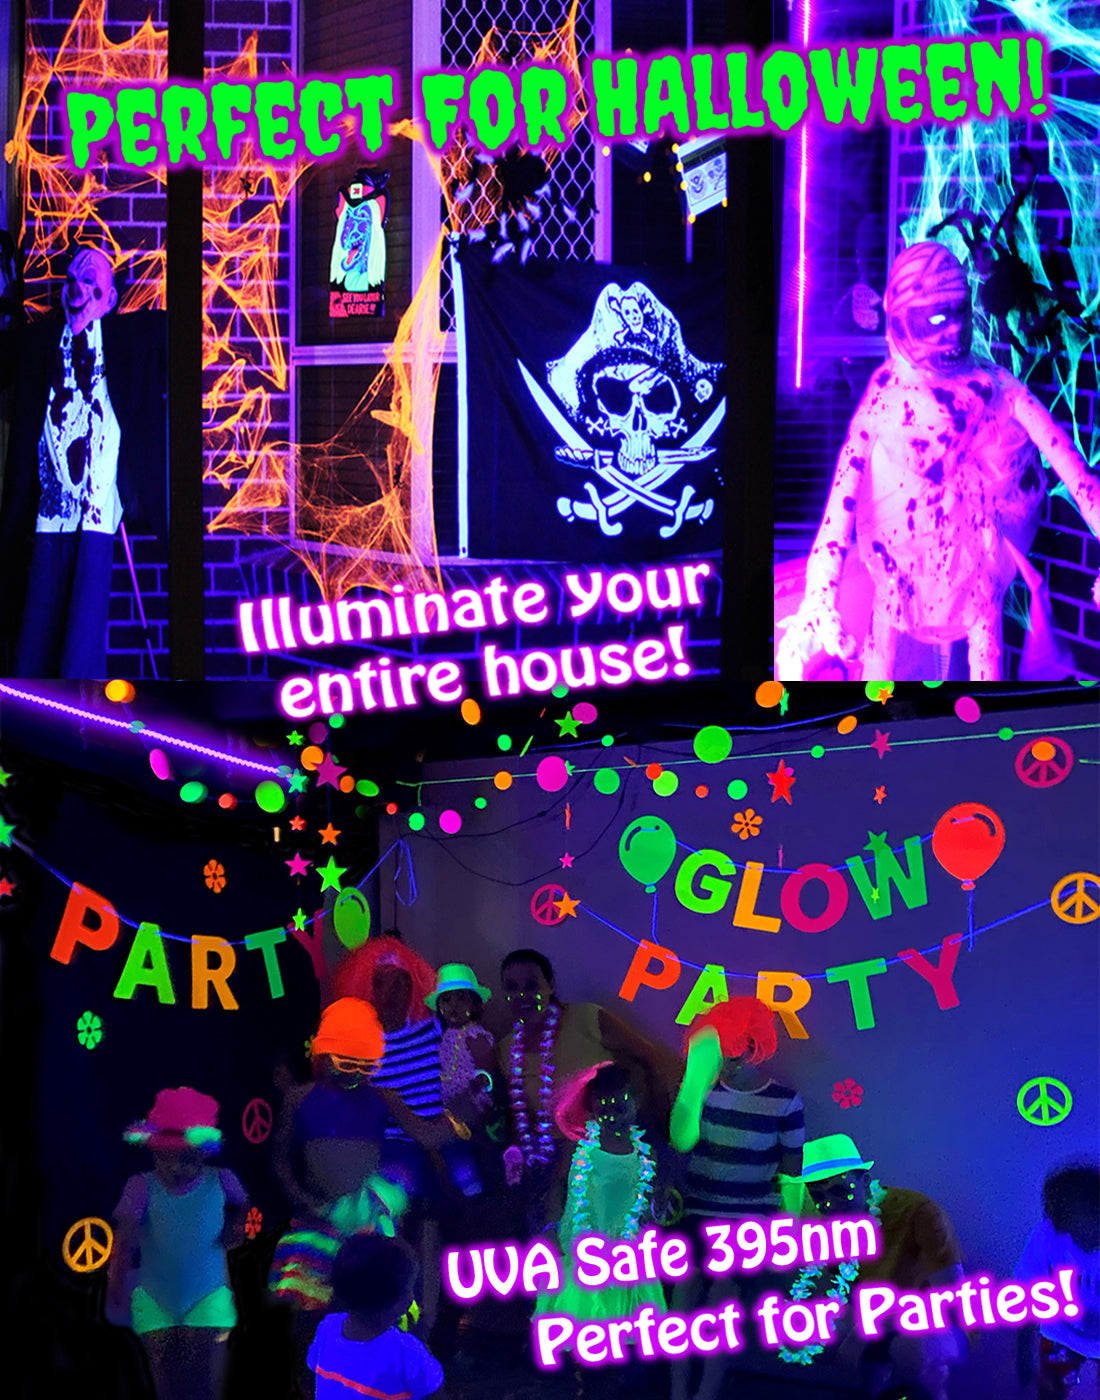 Black Light Glow Party Kit for Large Rooms 115W! 4 UV Blacklights LED Strips 12V